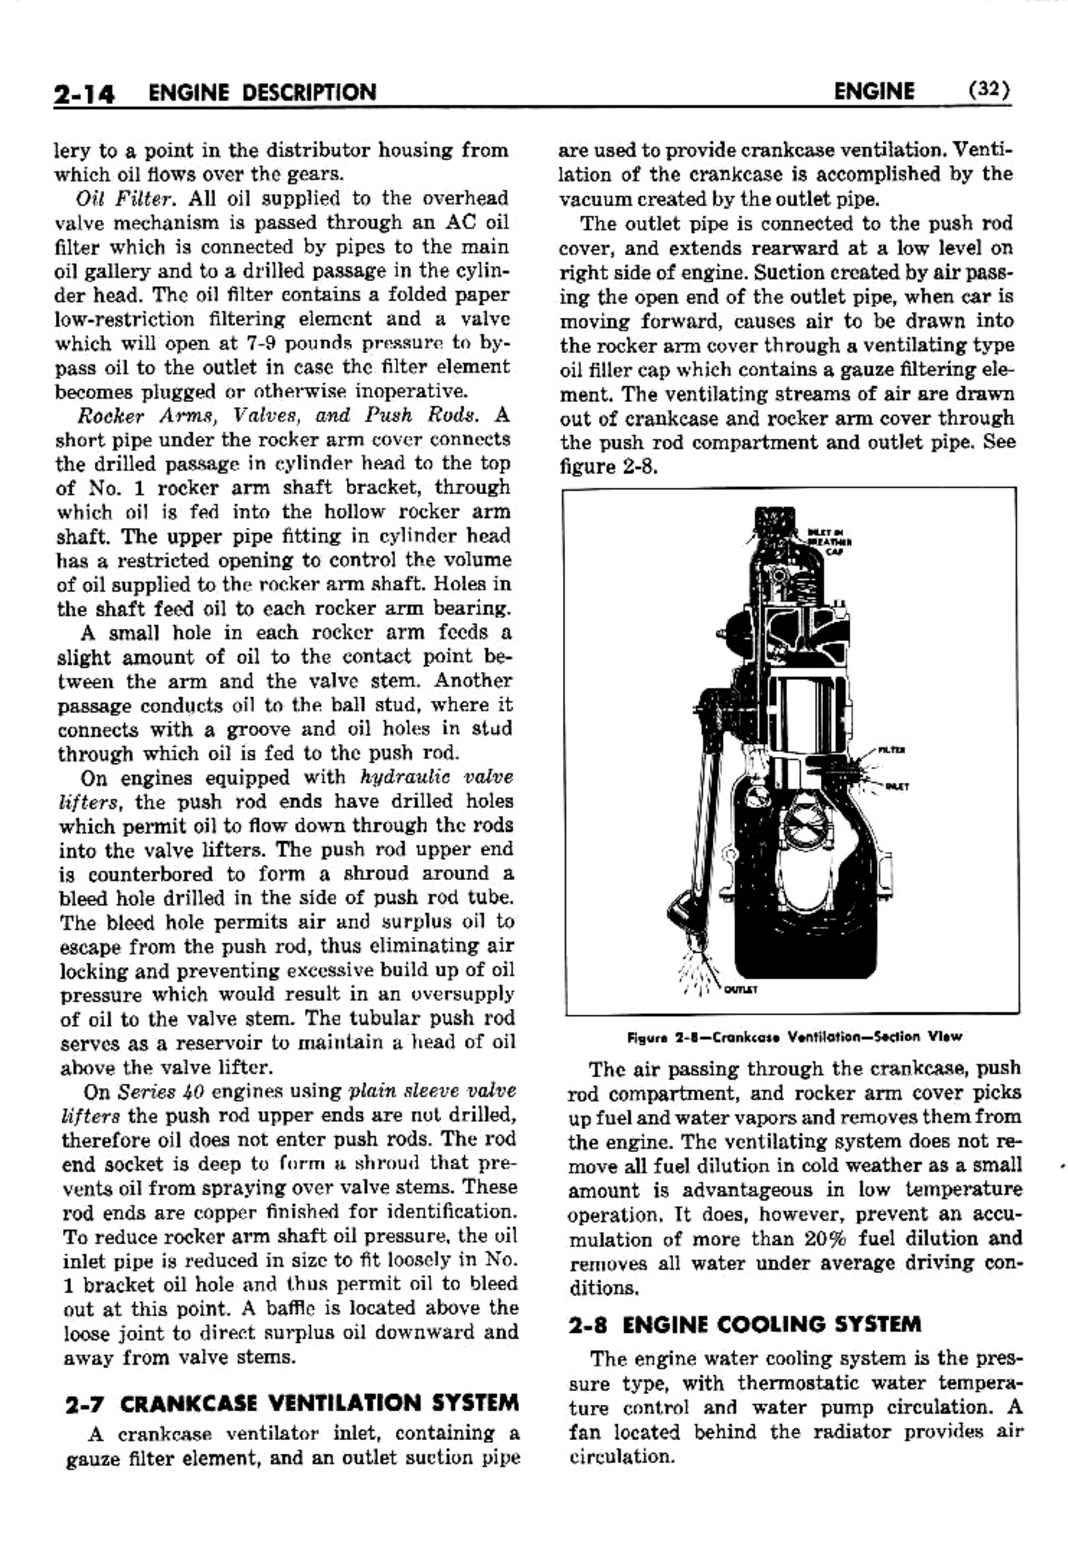 n_03 1952 Buick Shop Manual - Engine-014-014.jpg